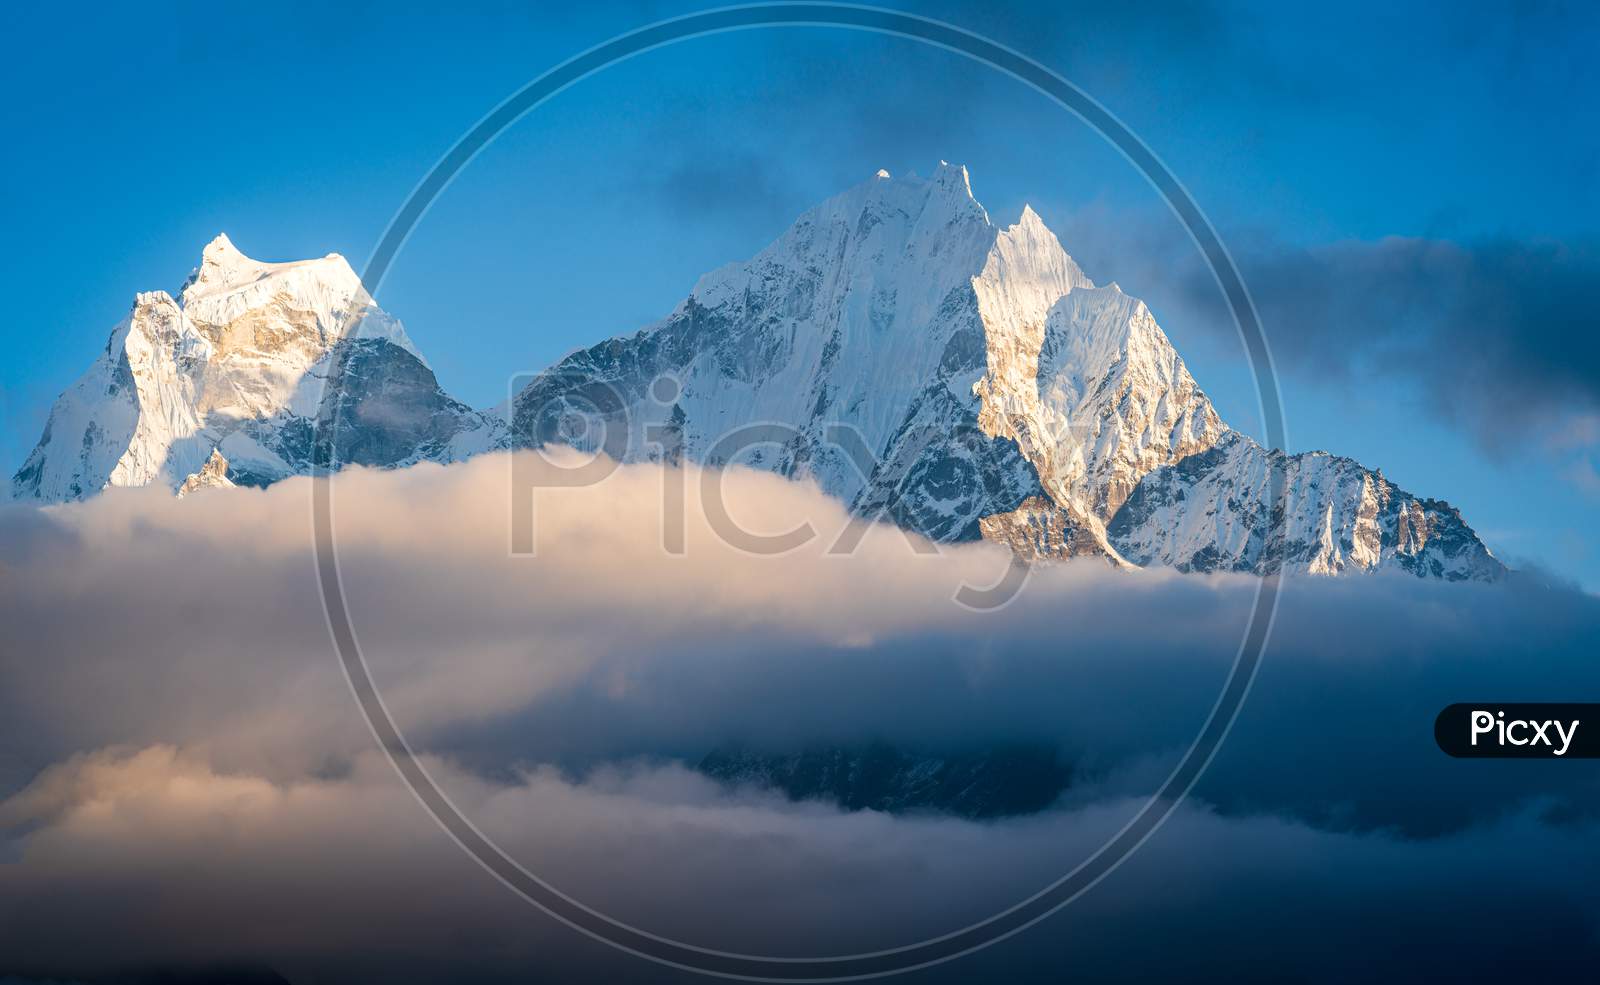 Thamserku and Kangtega mountain peaks towering above cloud